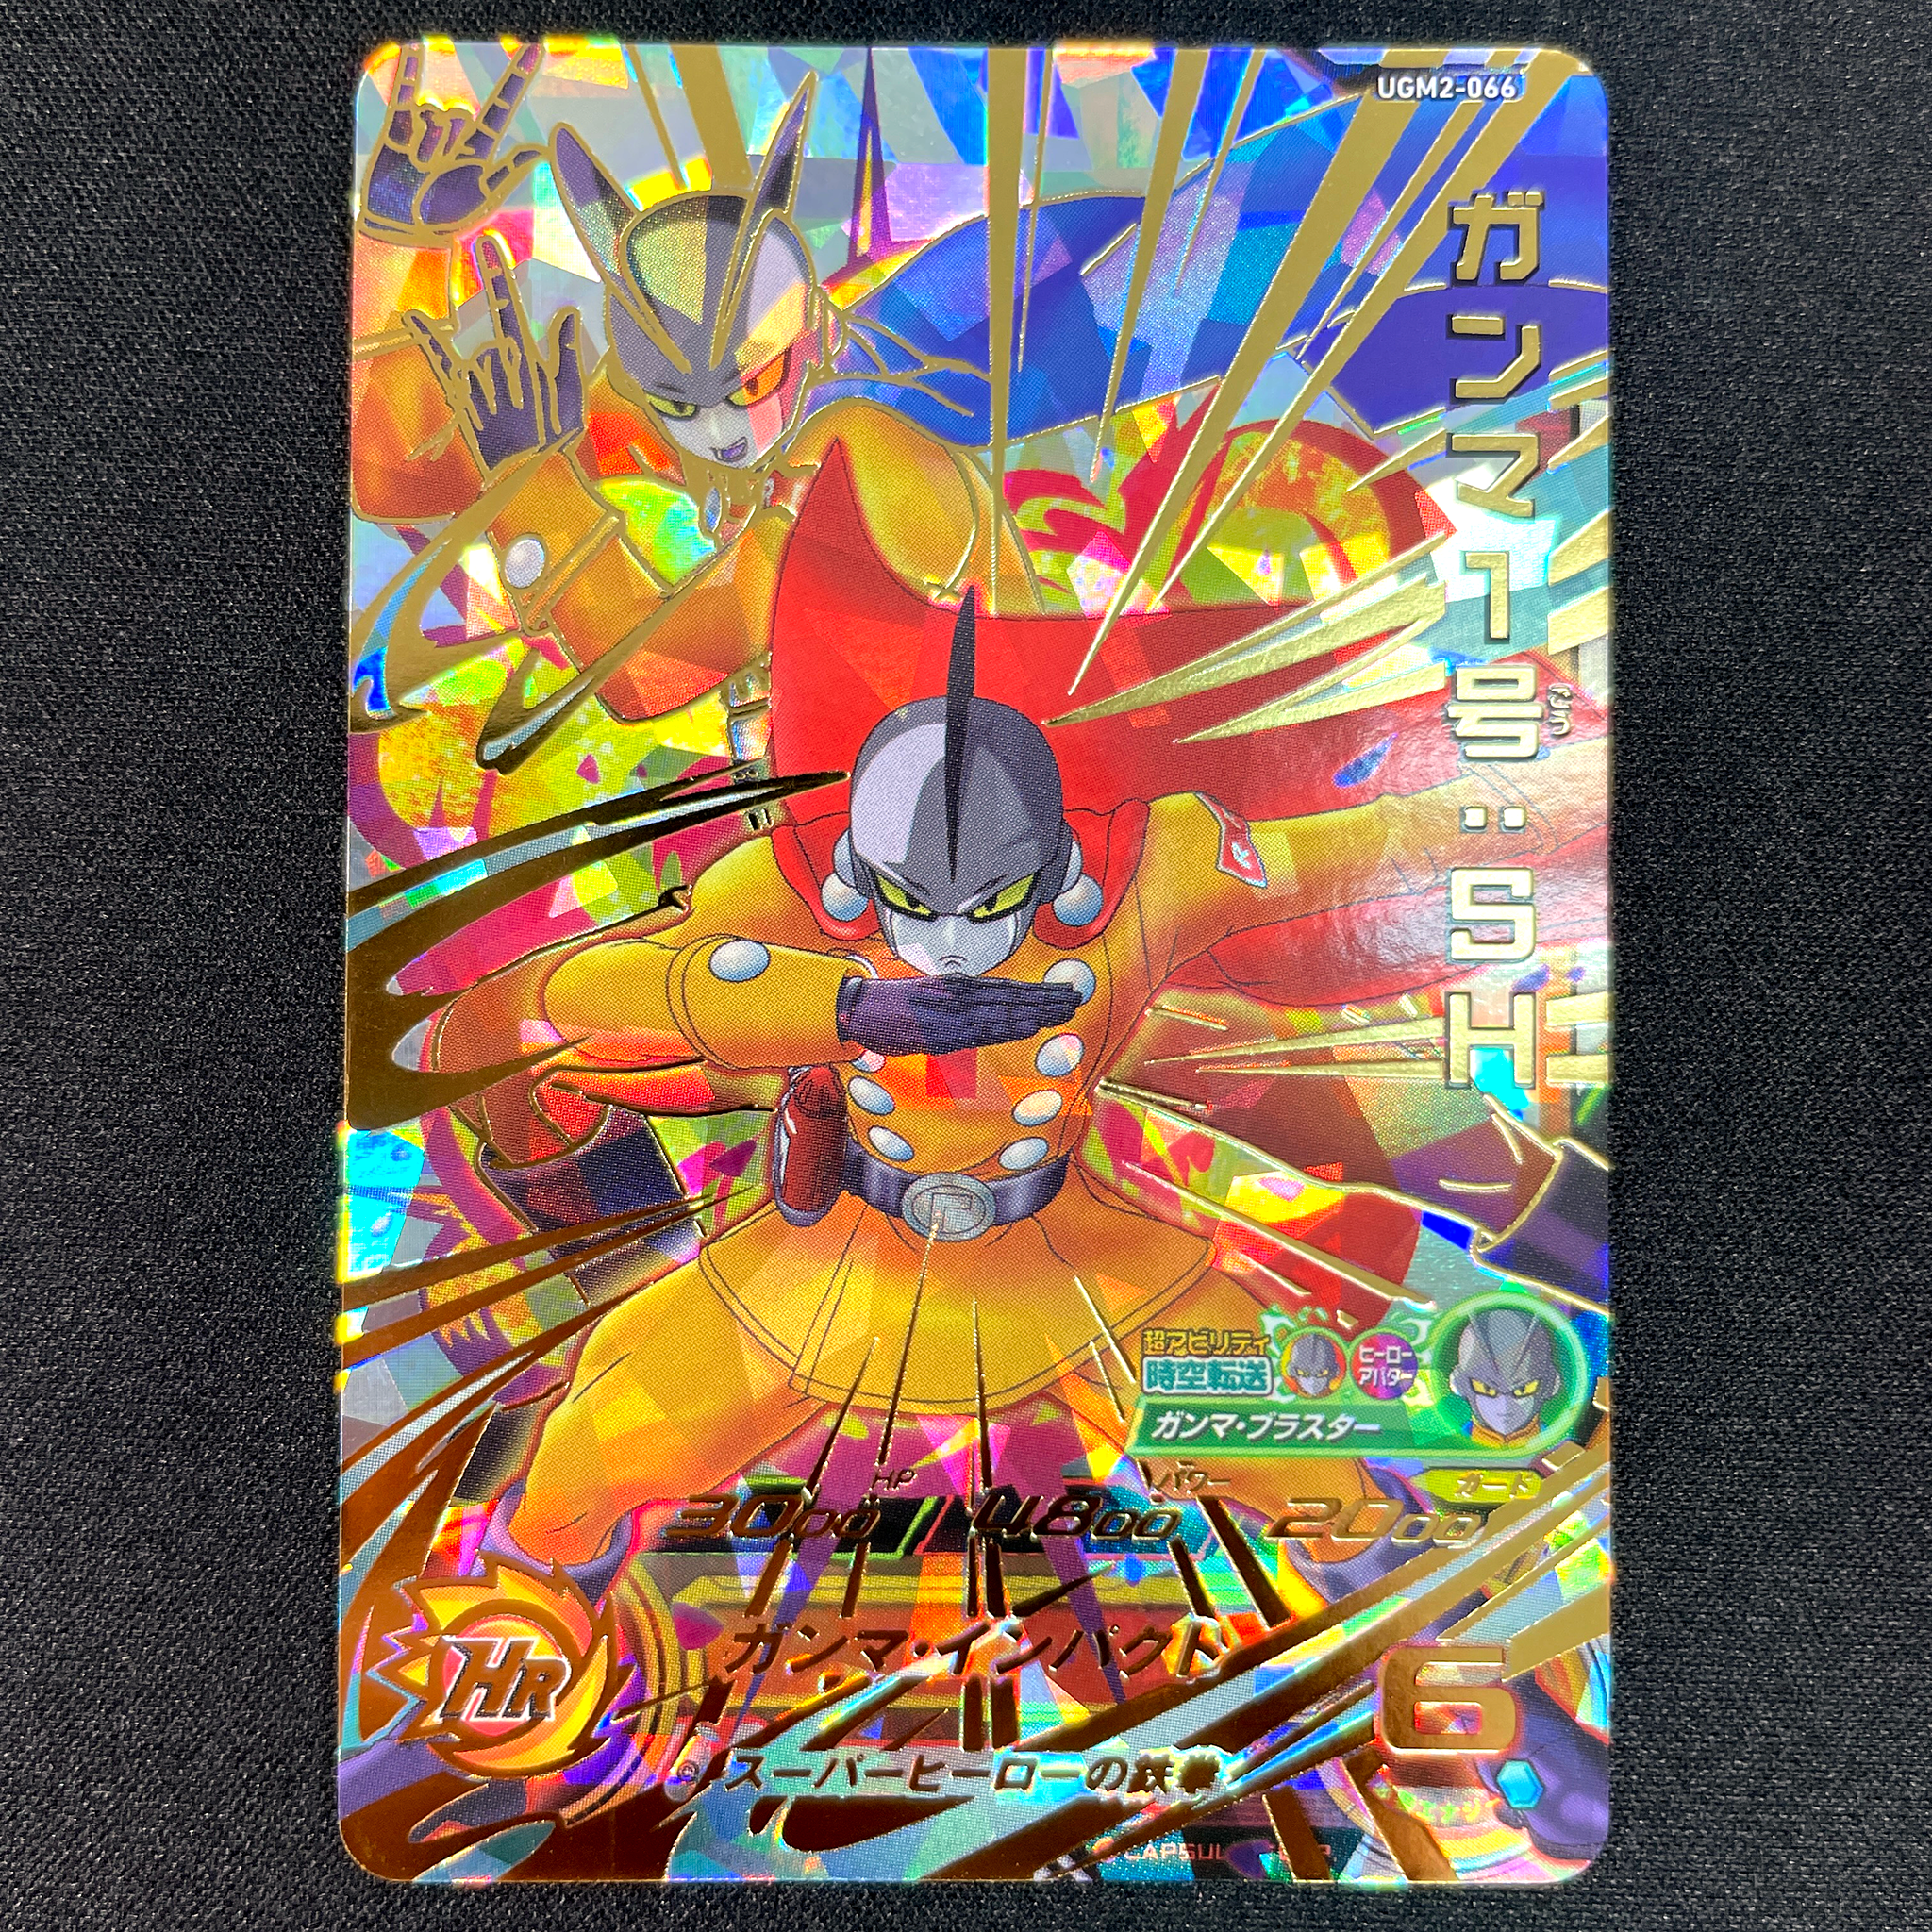 SUPER DRAGON BALL HEROES UGM2-066 Ultimate Rare card  Ganma 1 : SH